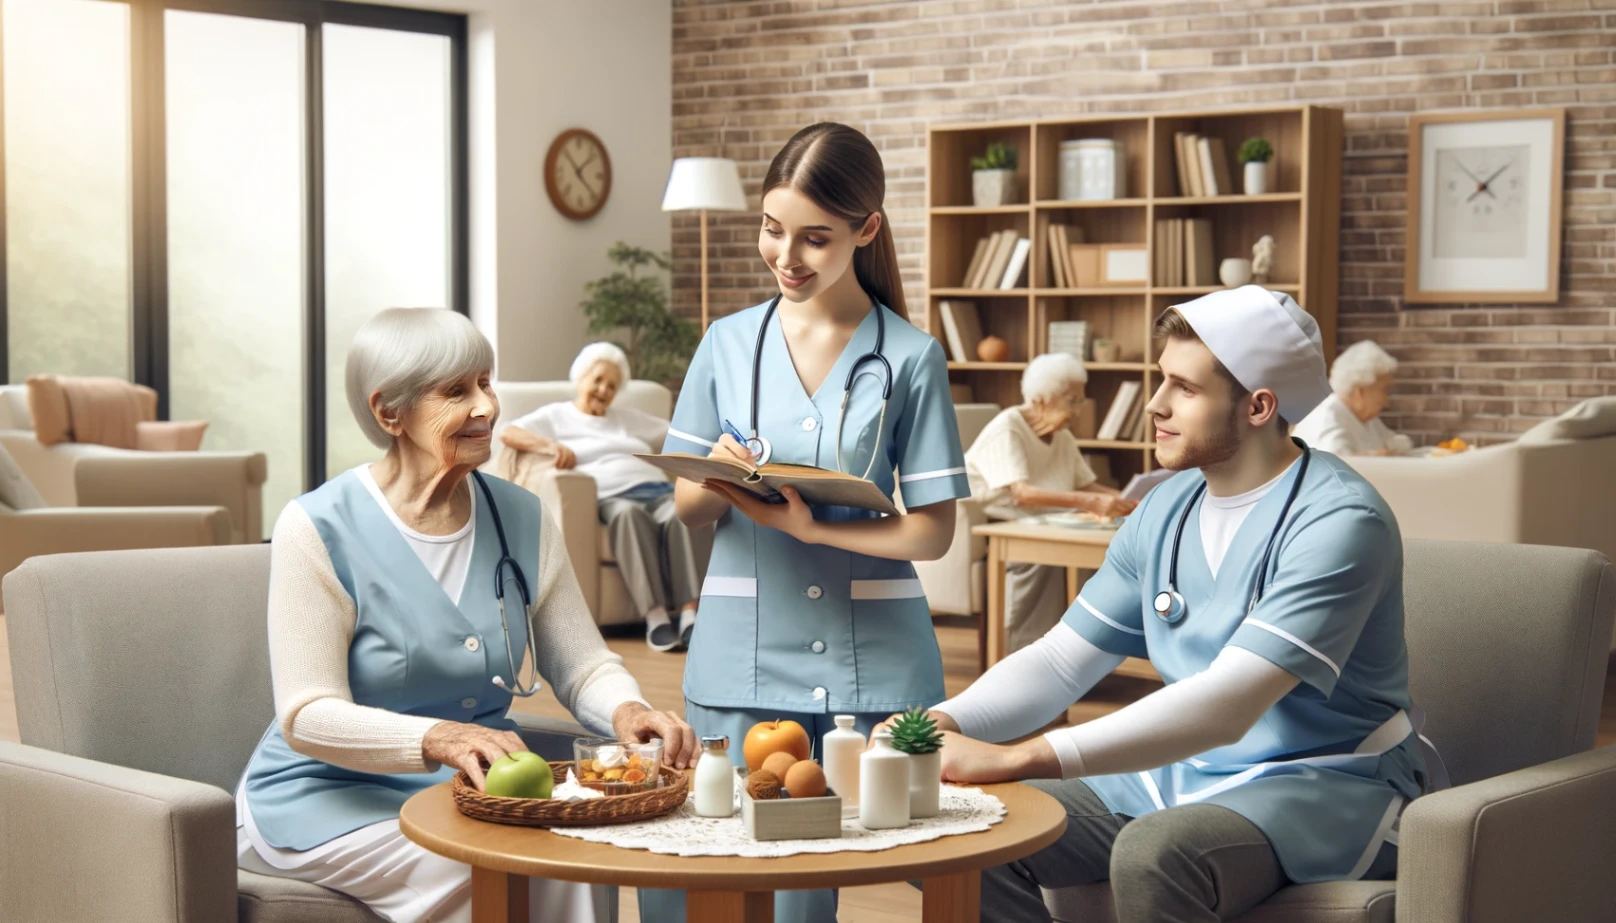 Elder Care Jobs: 15 Roles, Training for Entry-Level